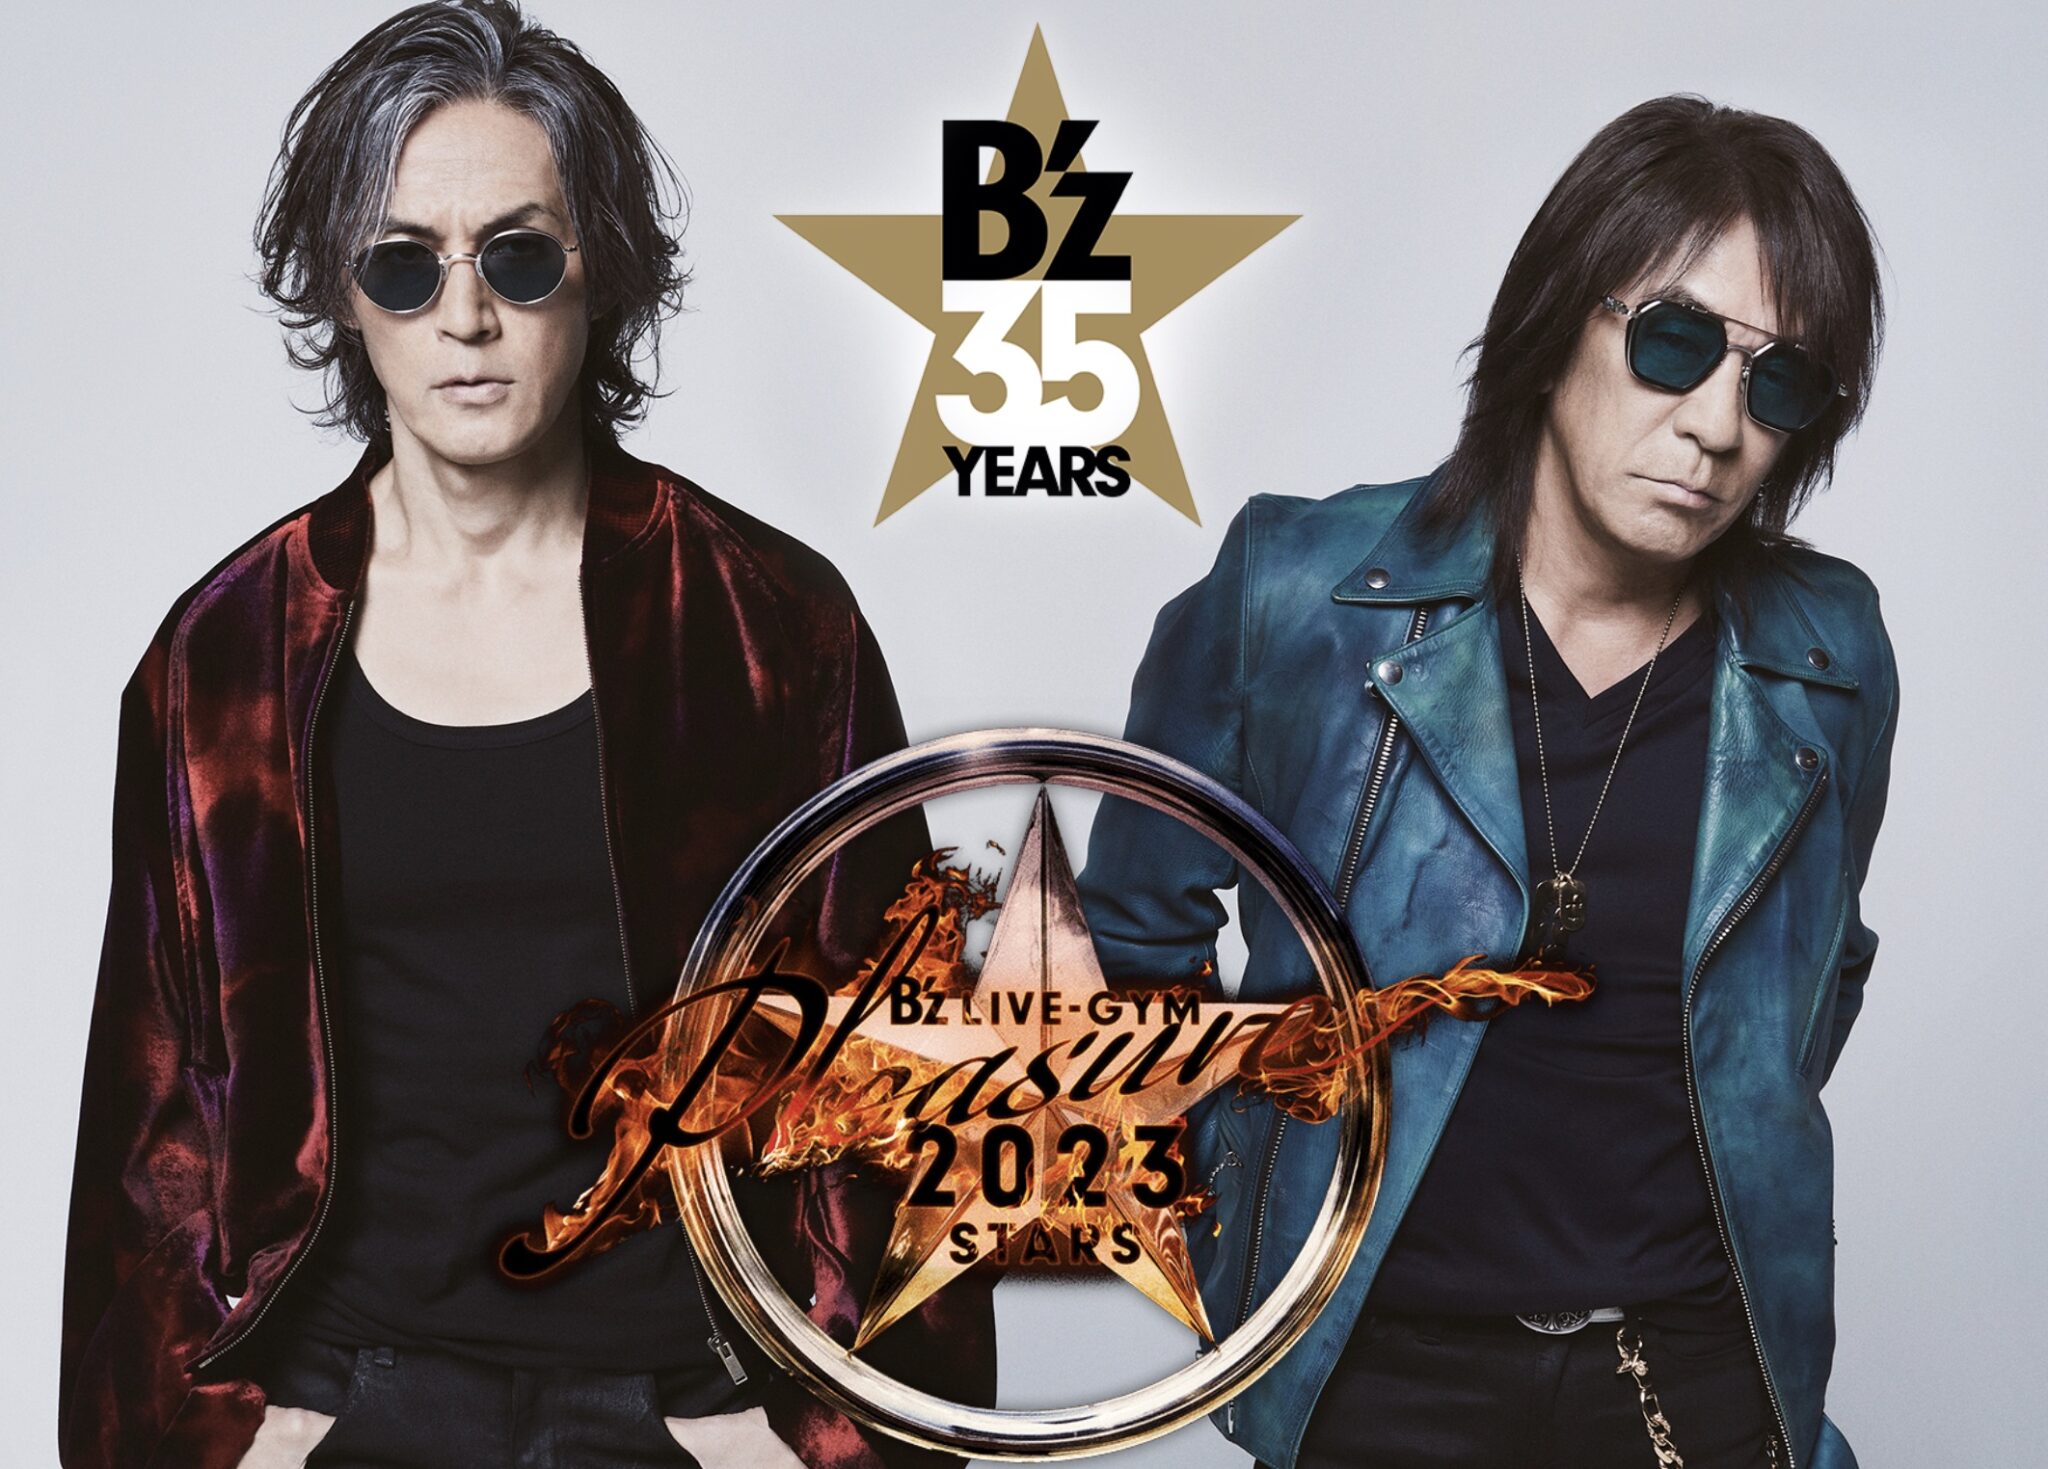 B’z LIVE-GYM Pleasure 2023 -STARS- Tour Schedule Announced | OFF THE